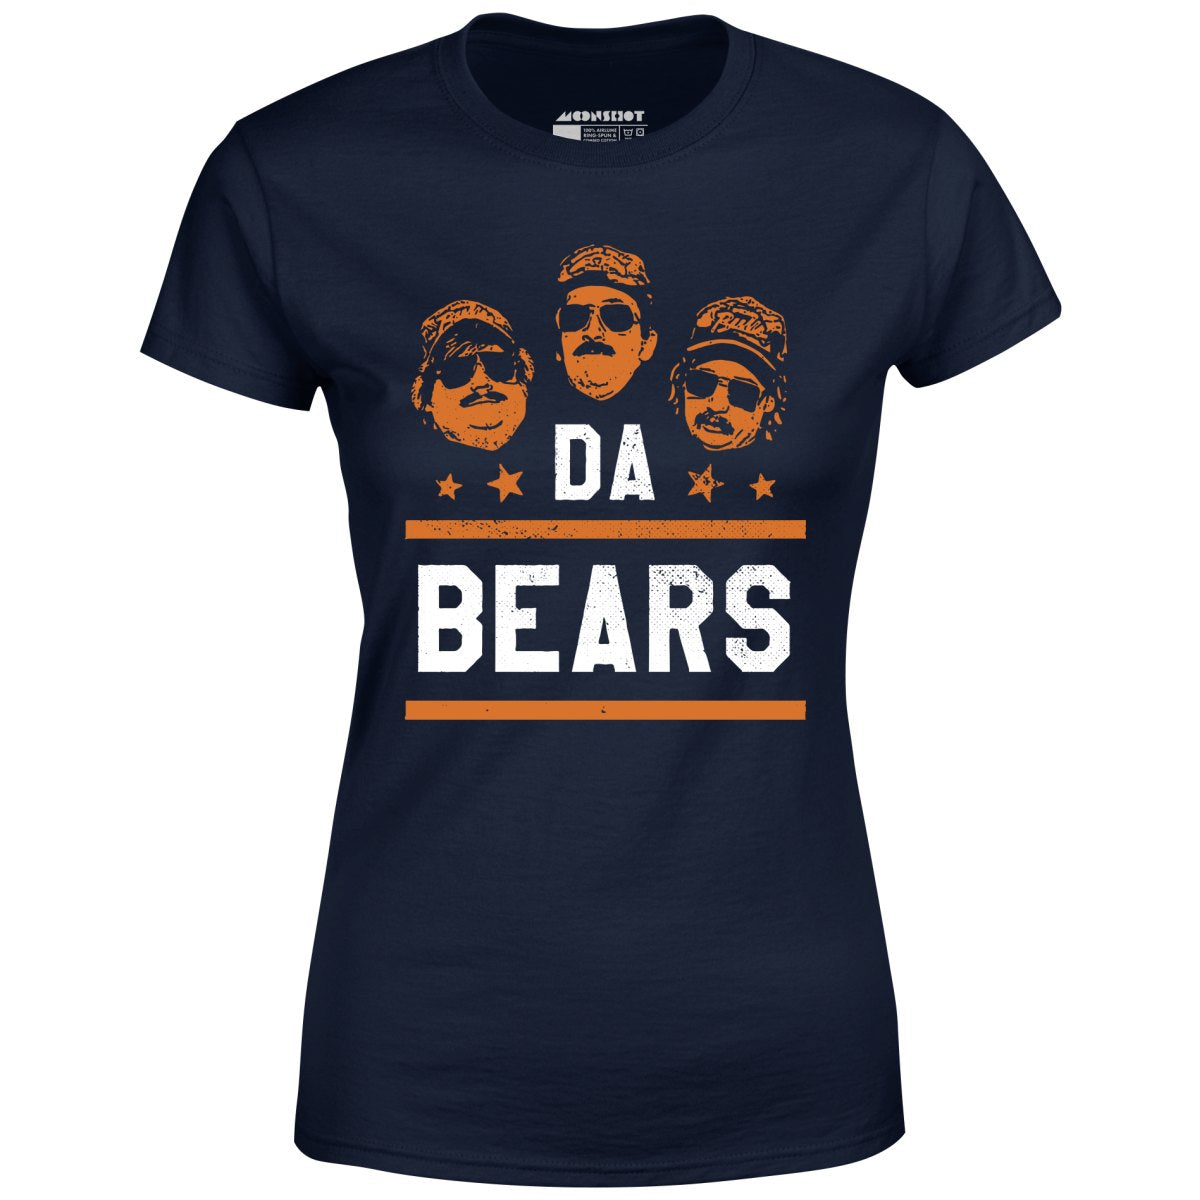 Da Bears - Women's T-Shirt